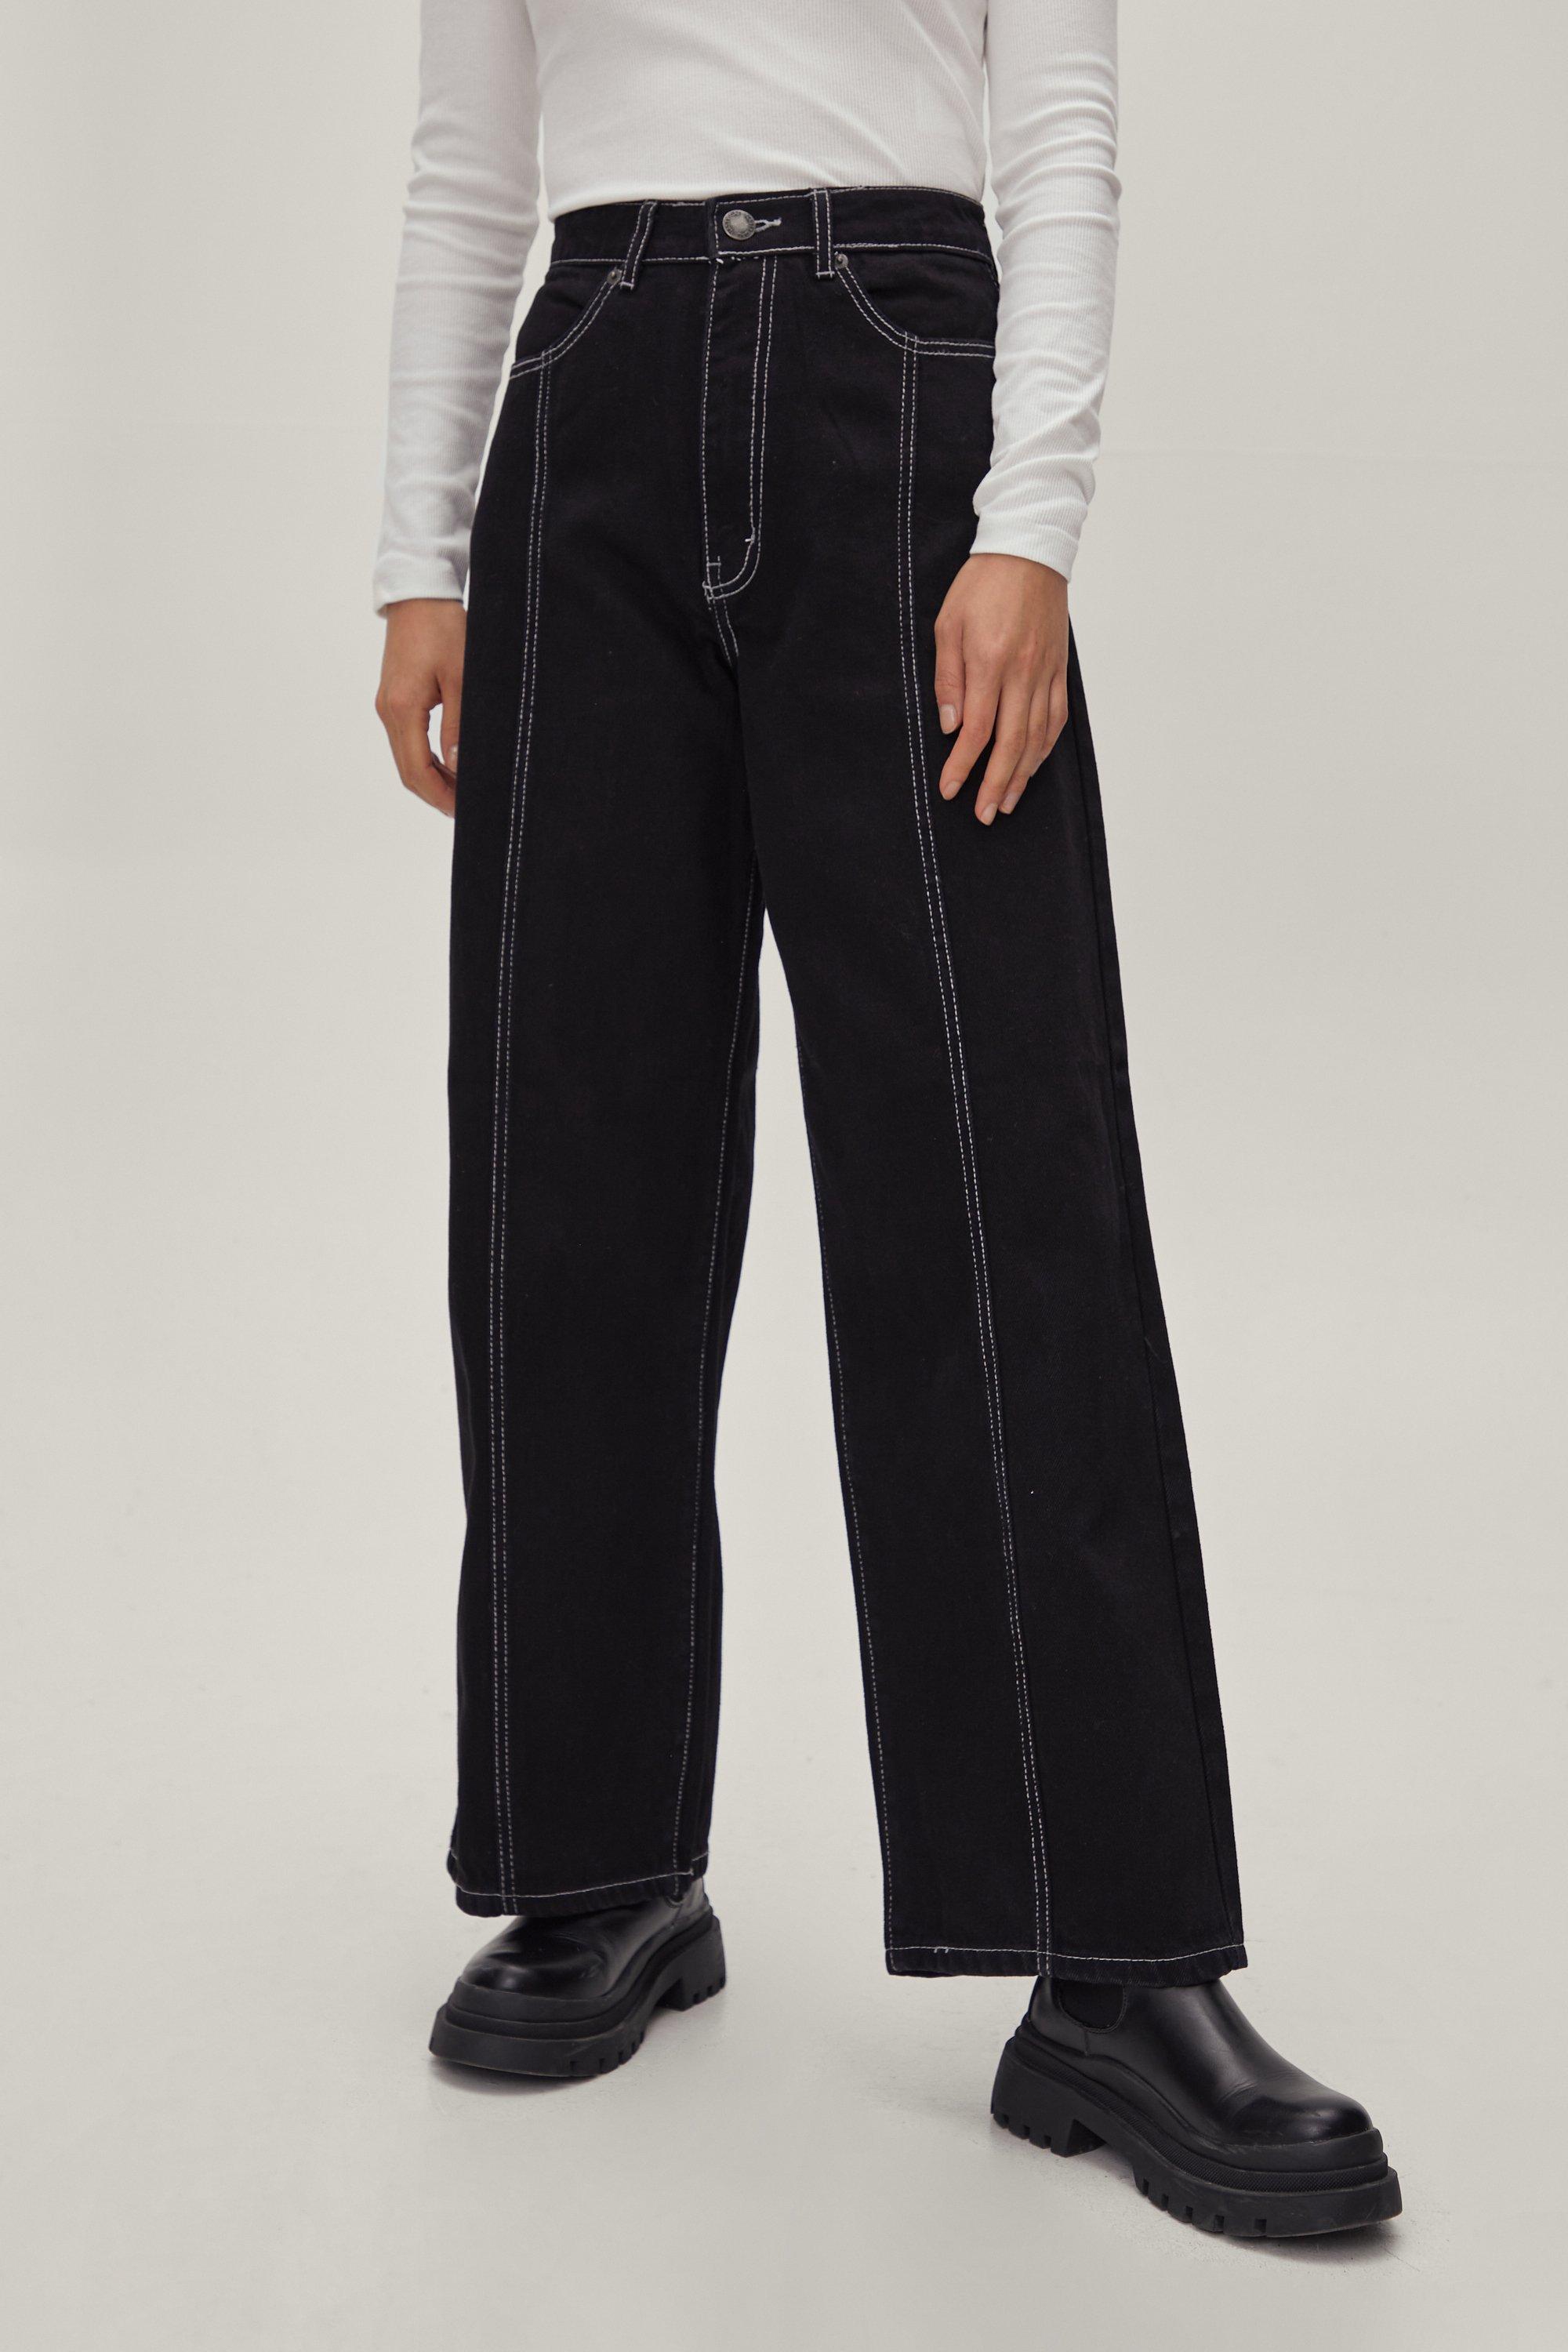 Buy IS.U Black Womens Wide Leg Black Denim Jeans With Contrast Stitch